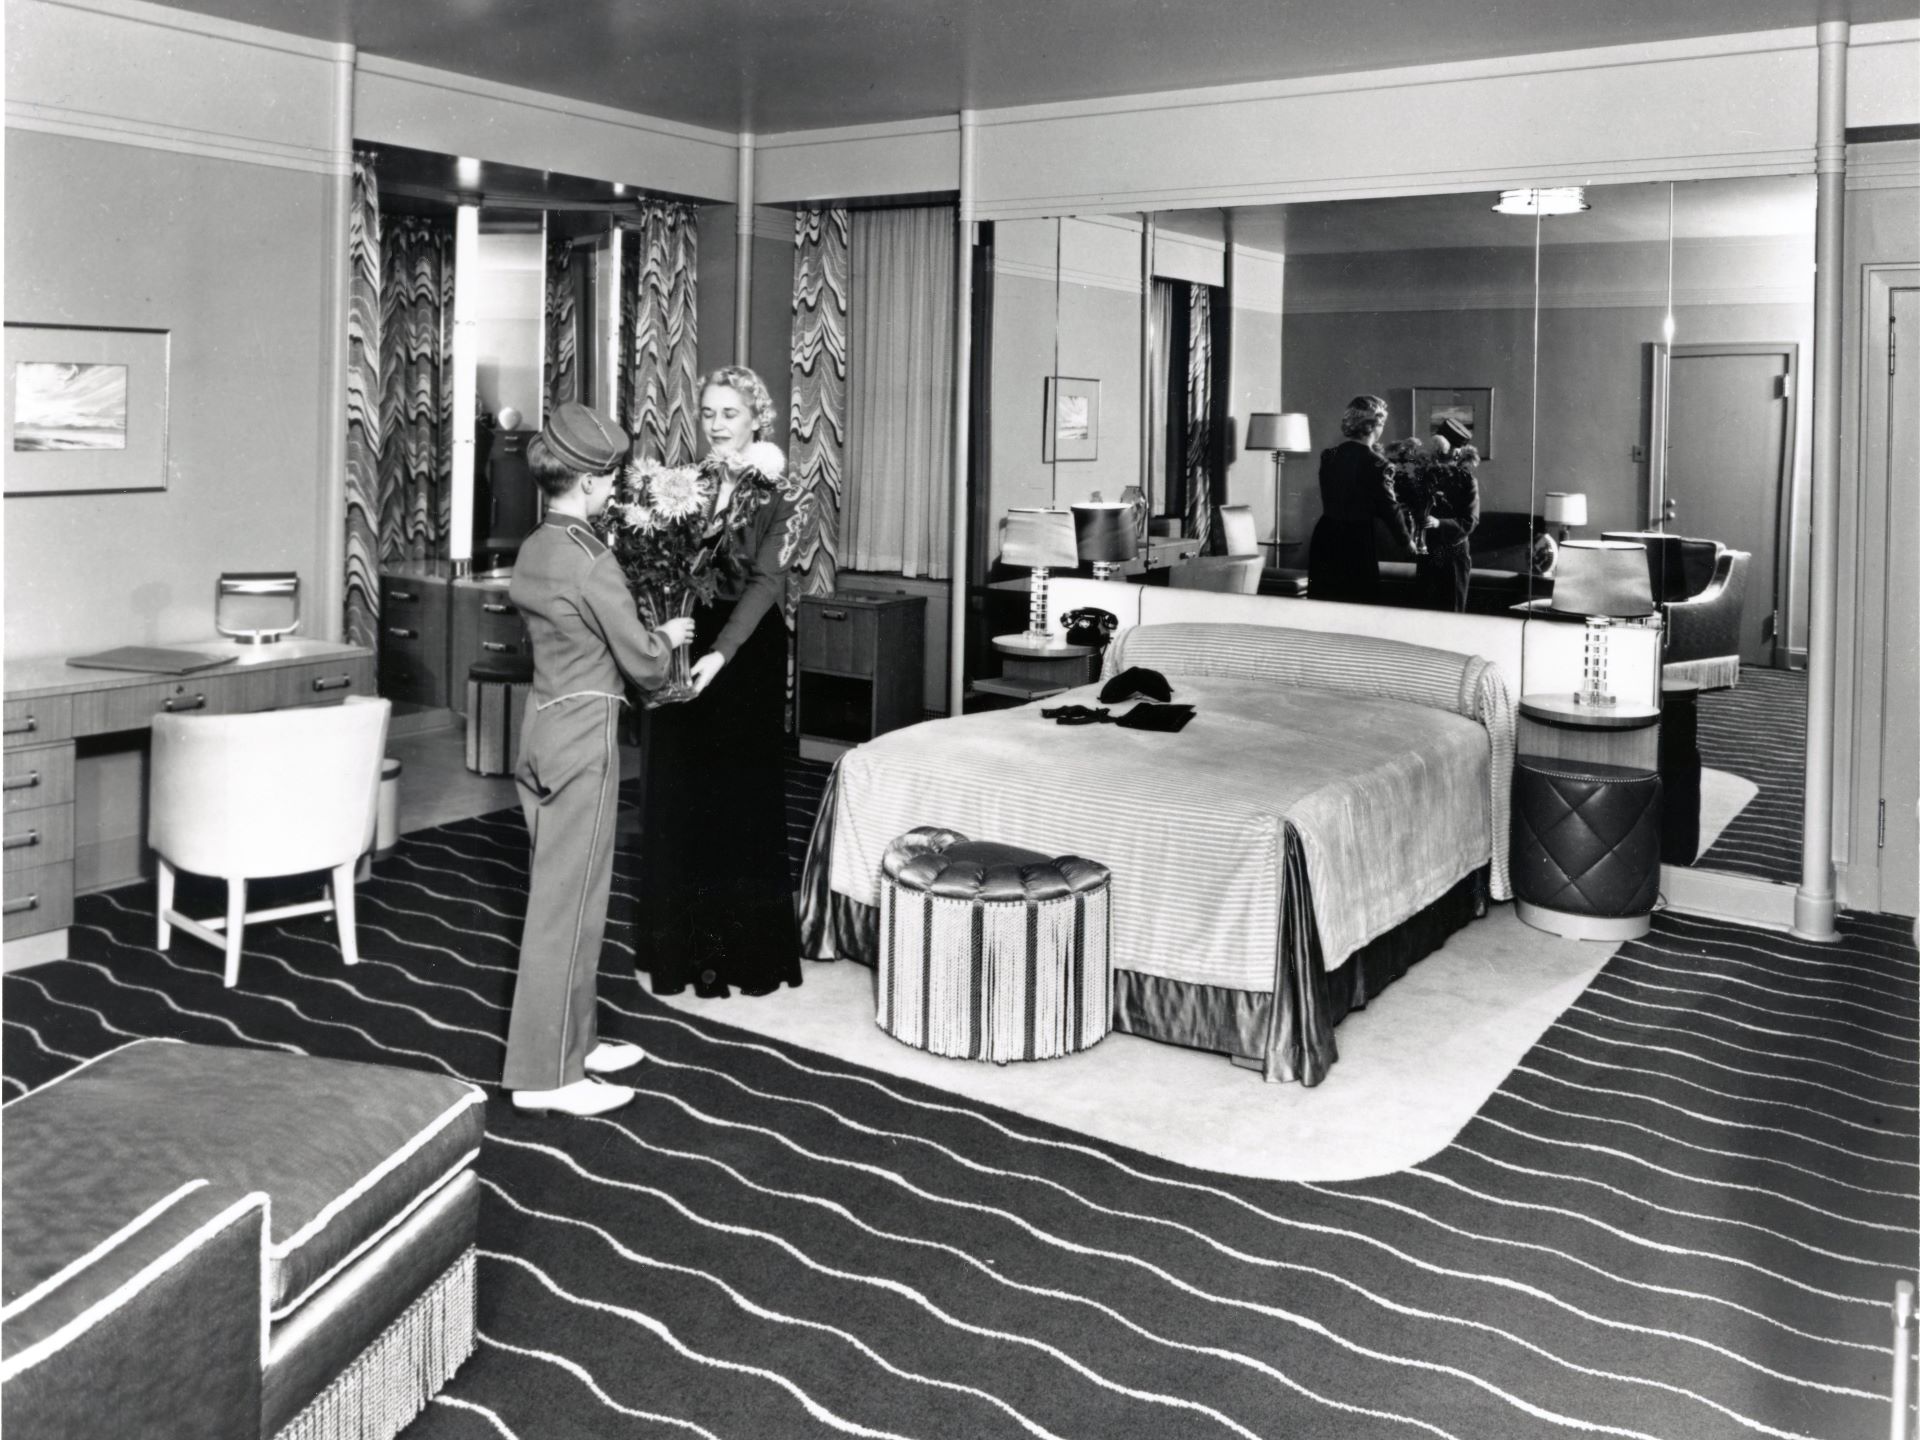 Photo of bell boy handing a guest a bouquet of flowers in an art moderne designed guest room circa 1939